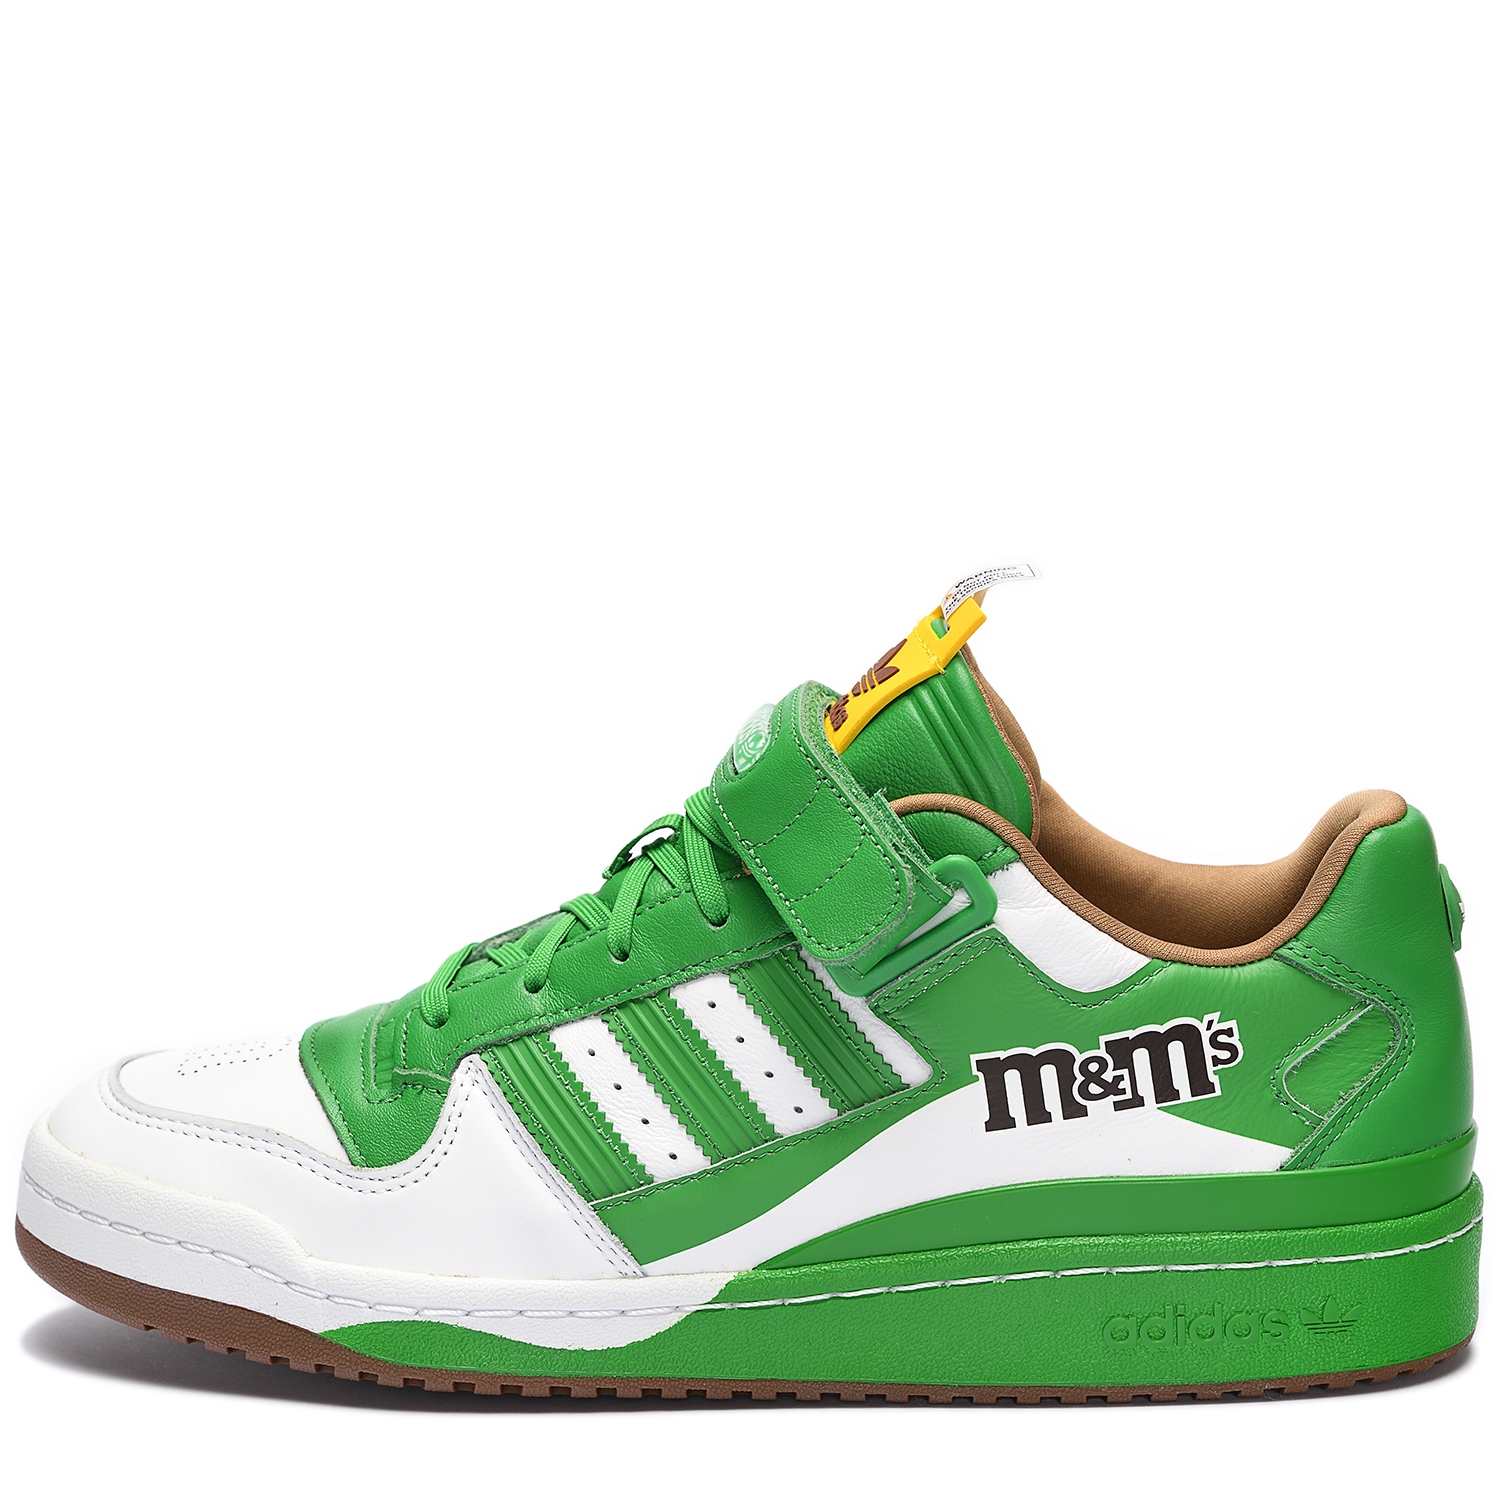 adidas x m&m's brand Forum 84 Low Green / Cloud White / Eqt Yellow